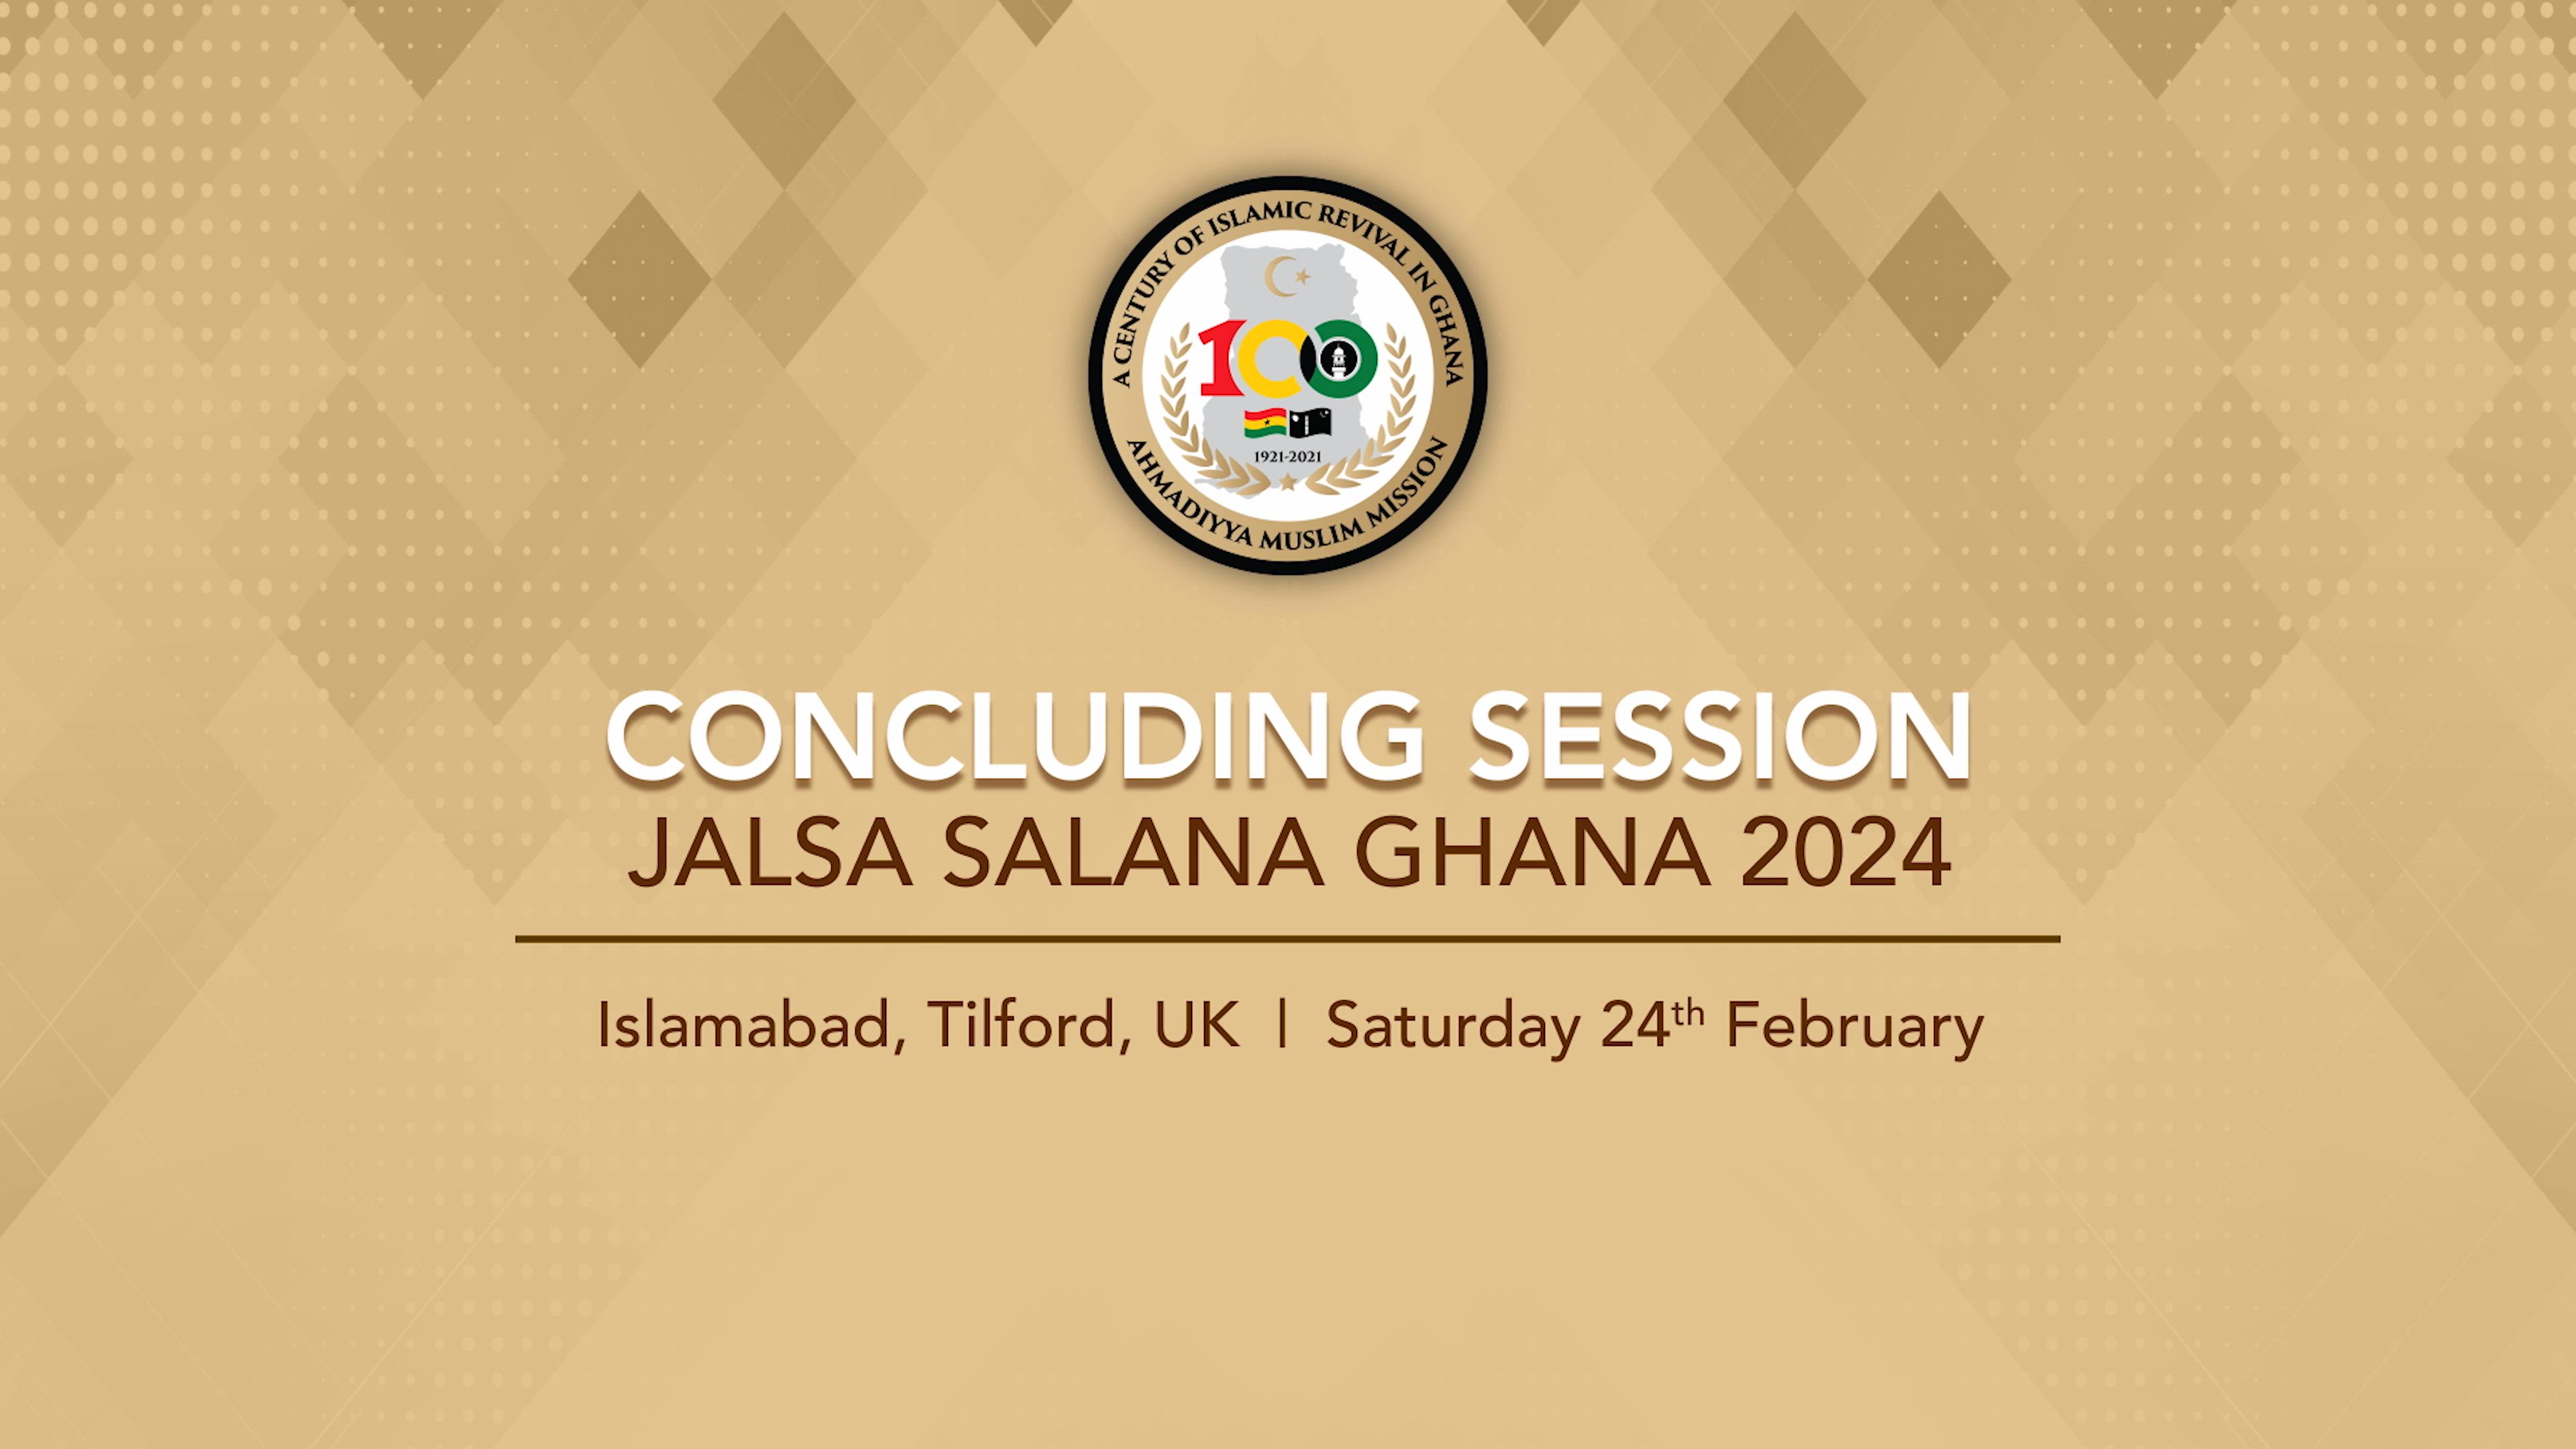 Jalsa Salana Ghana 2024